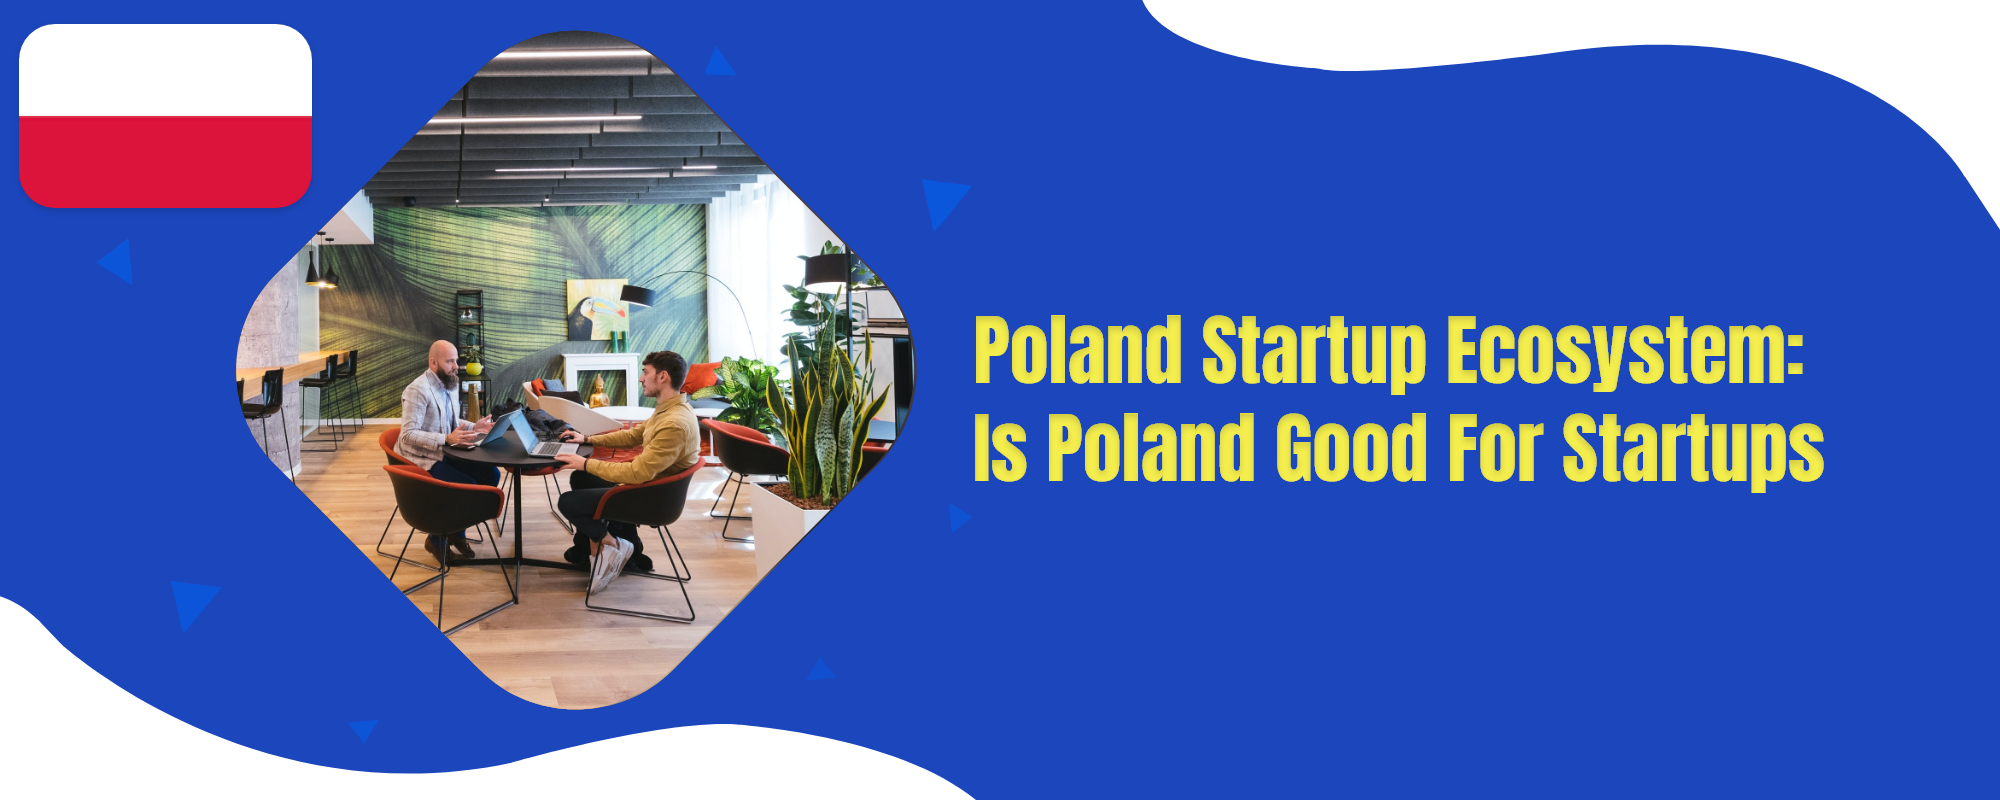 Poland startup ecosystem